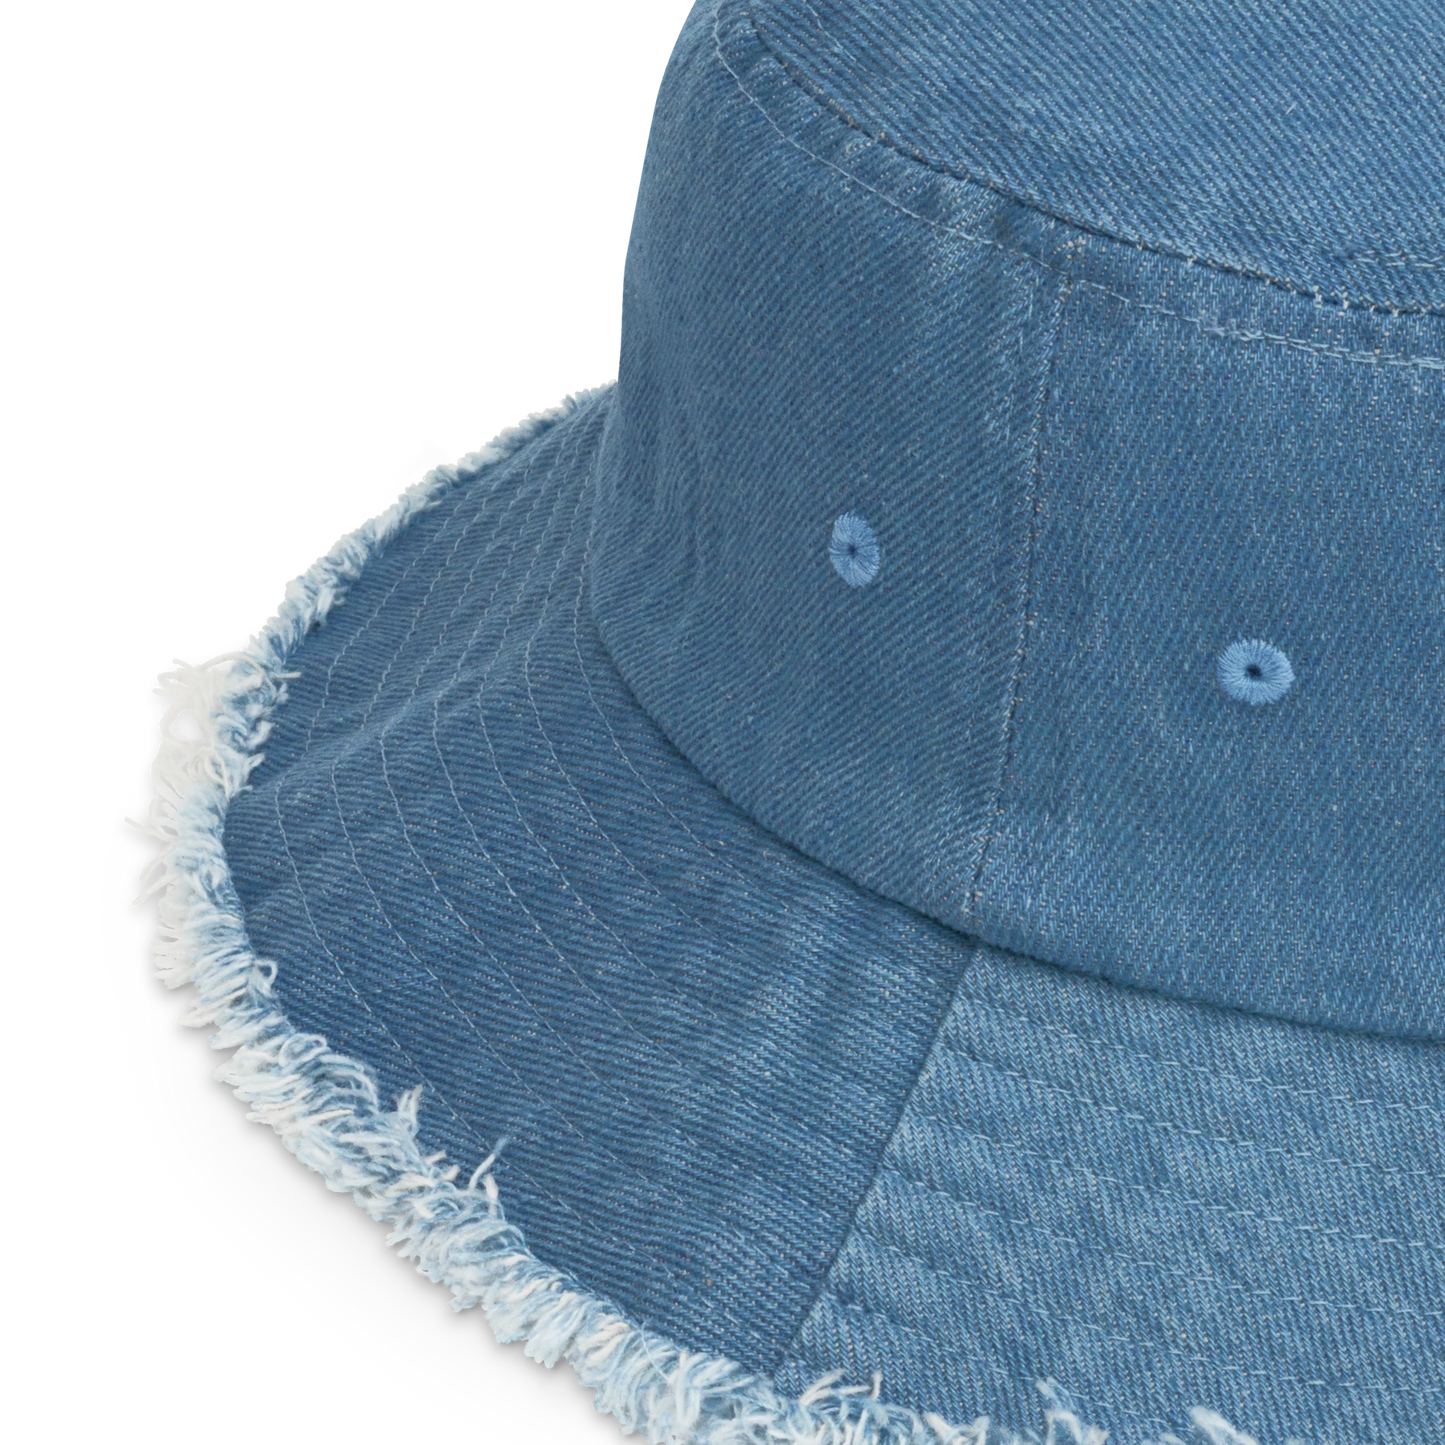 Homies Distressed Denim Bucket Hat